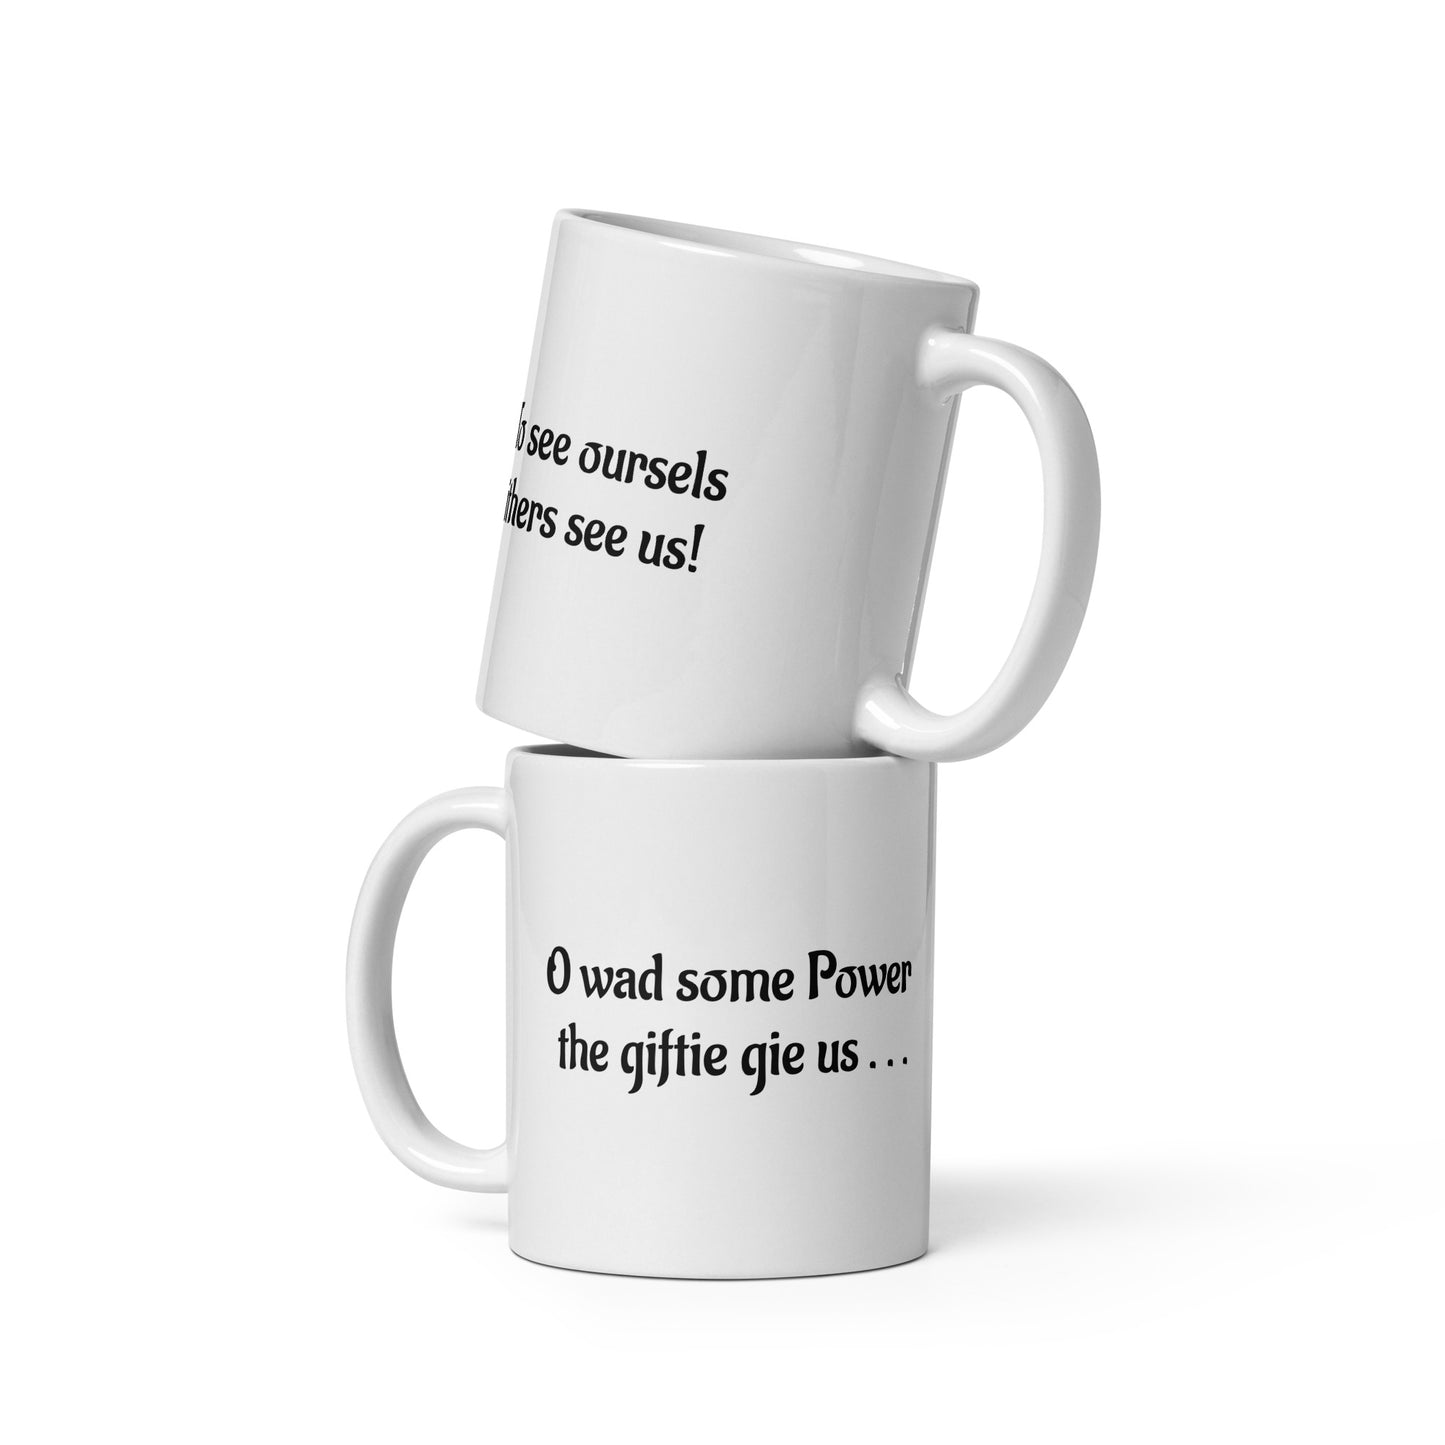 O wad some Power the giftie gie us, White glossy mug